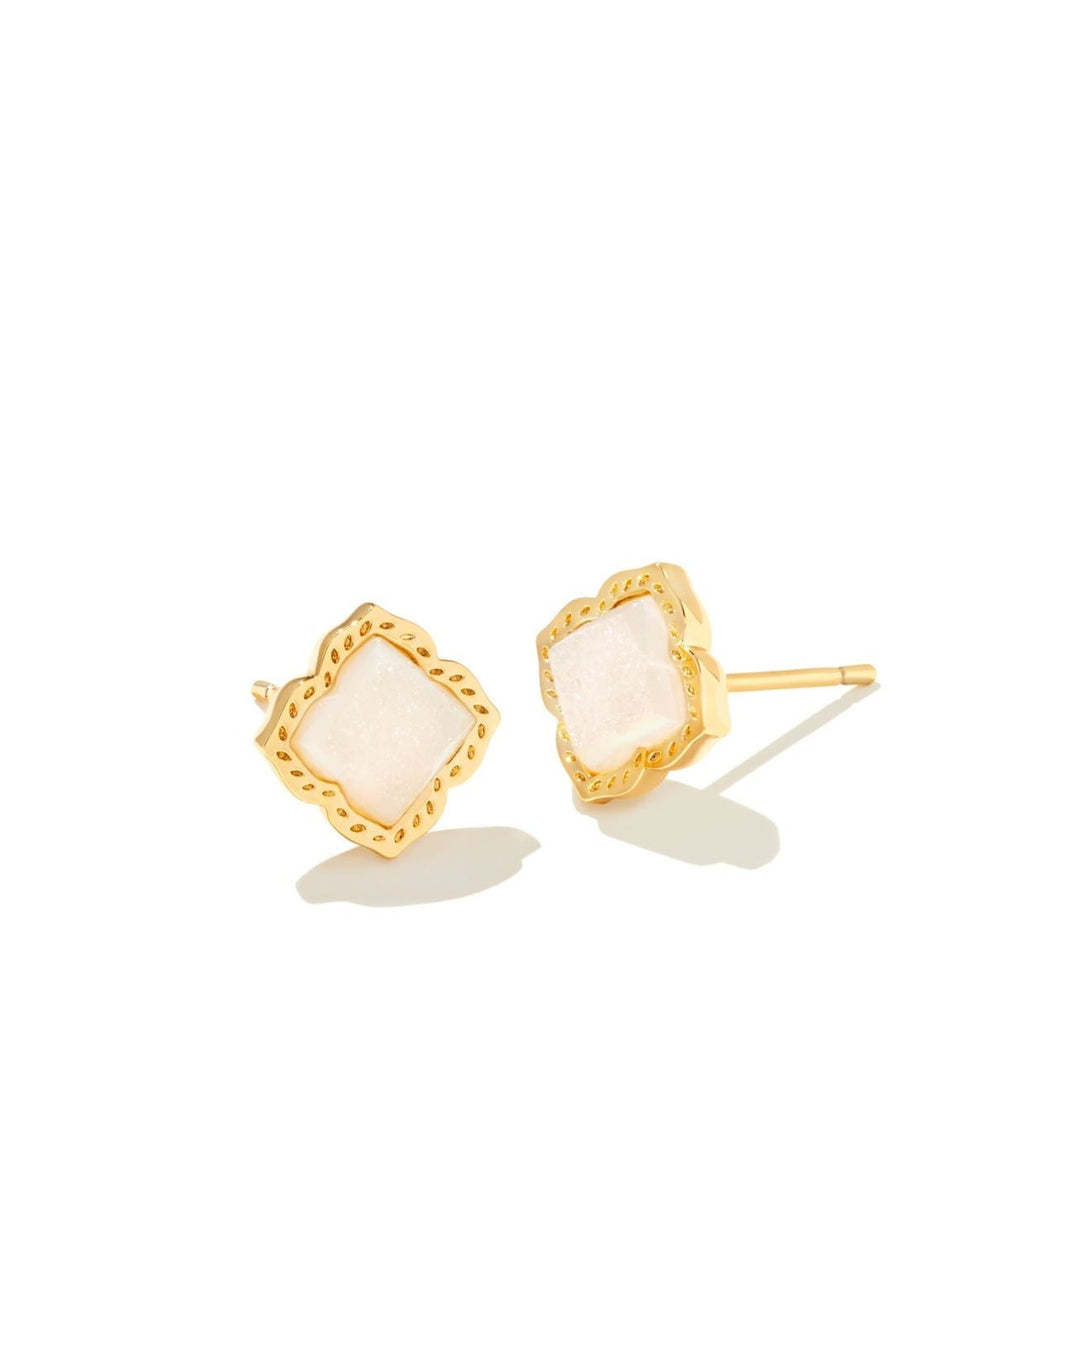 Kendra Scott Mallory Stud Earrings in Gold Iridescent Drusy